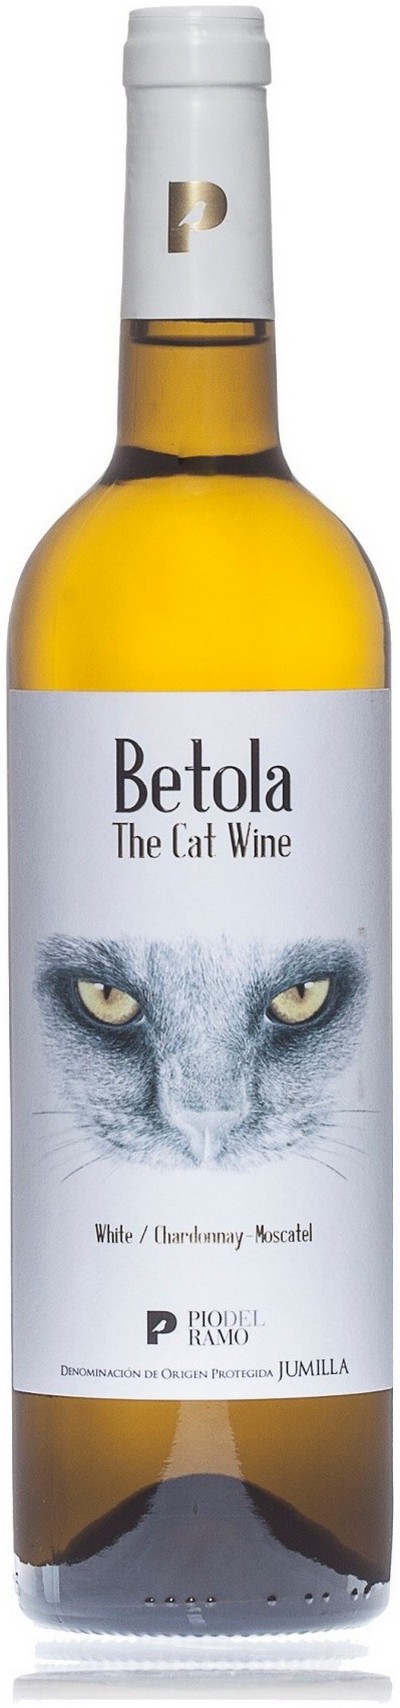 betola-the-cat-wine-white-2018